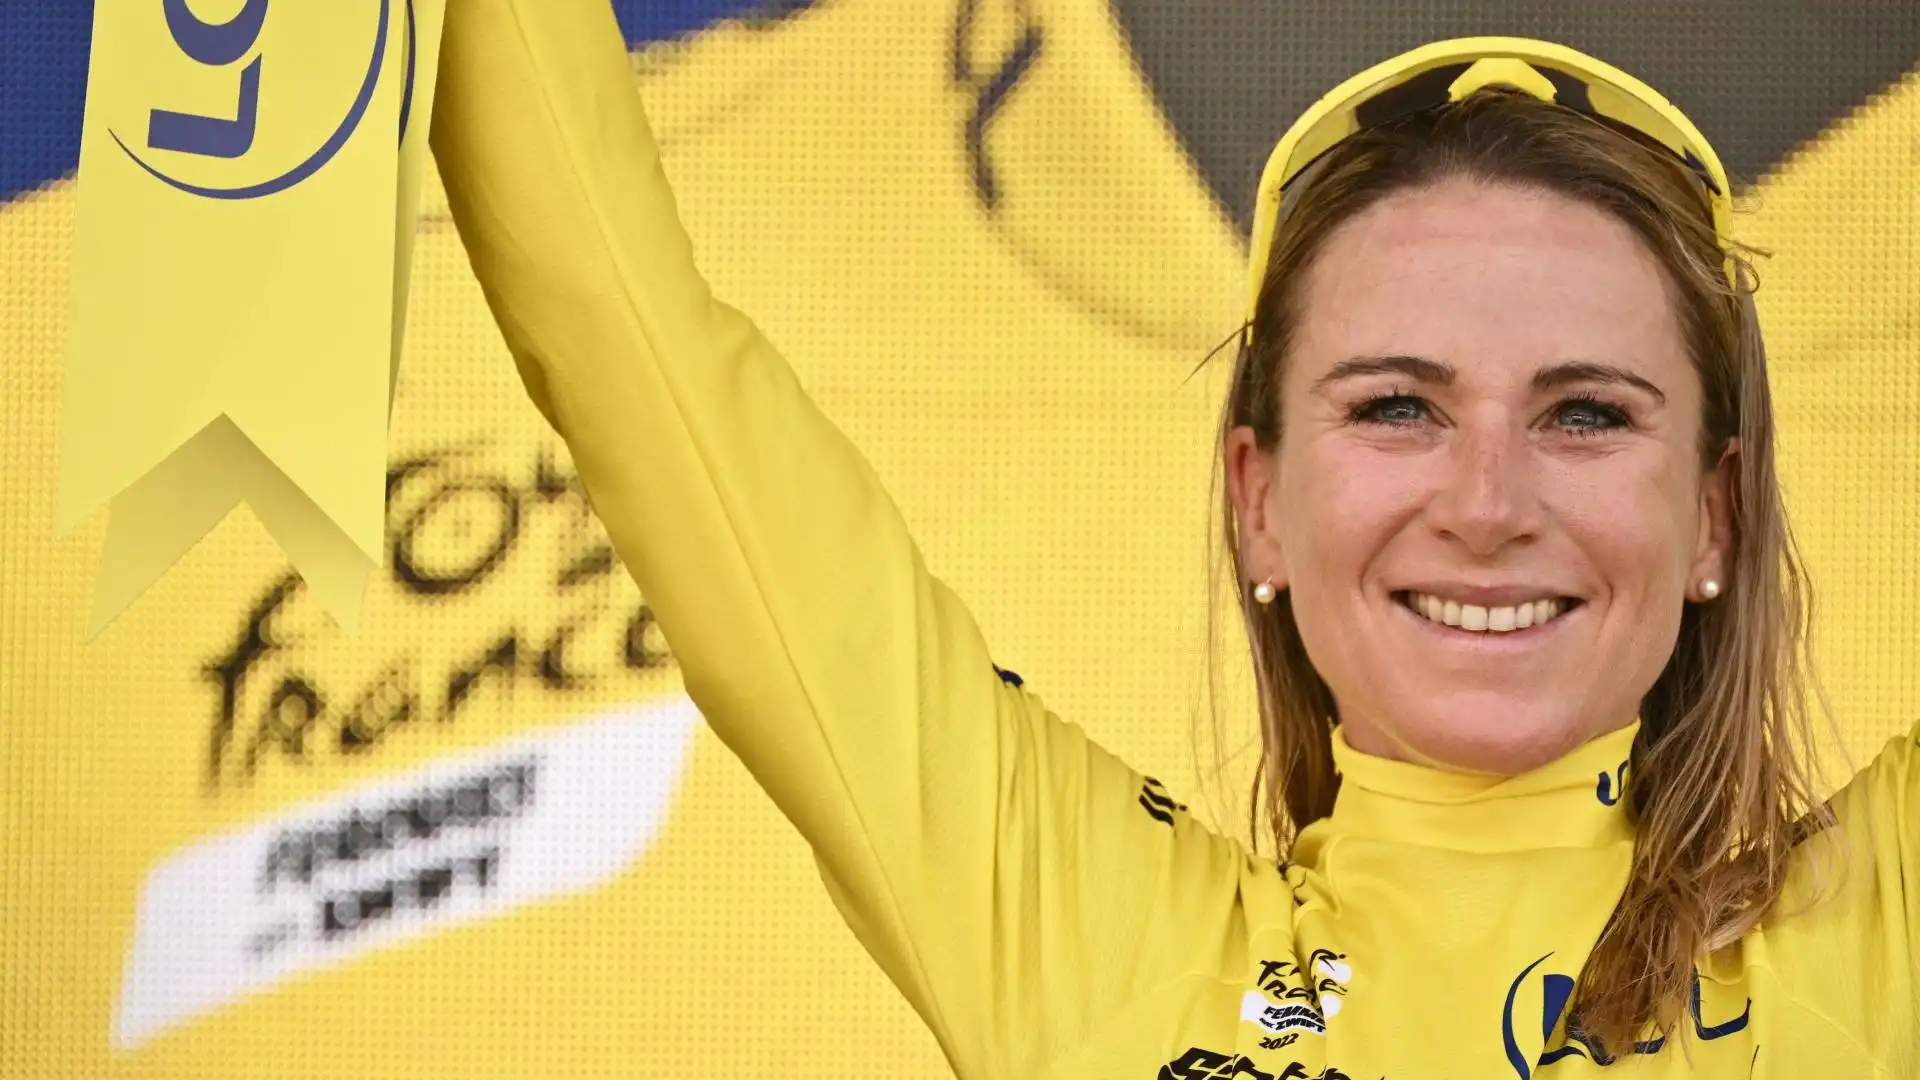 La bellissima ciclista olandese ha trionfato al Tour de France